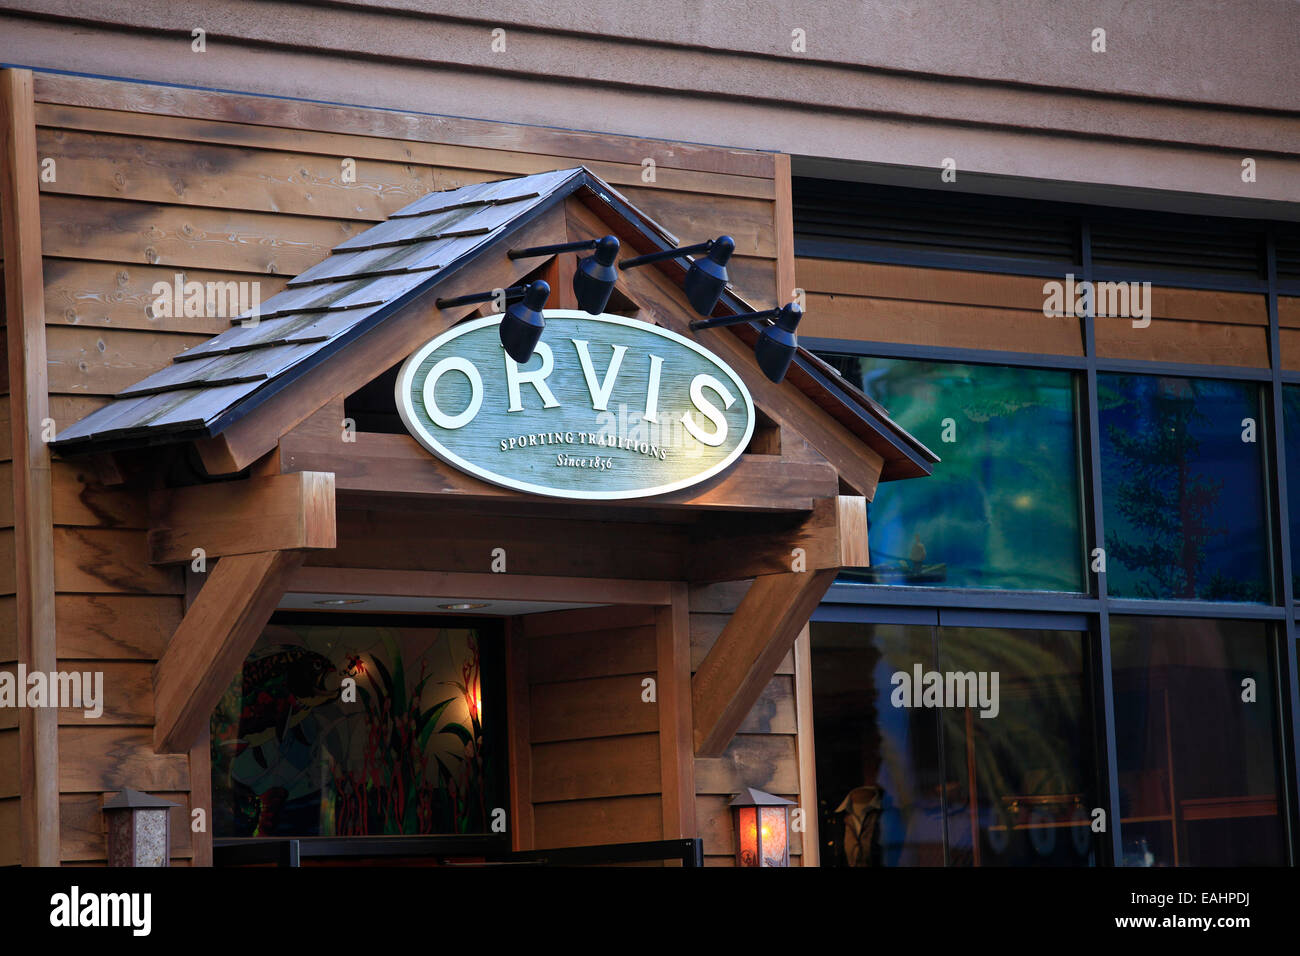 Orvis sign at Santana Row in San Jose Stock Photo